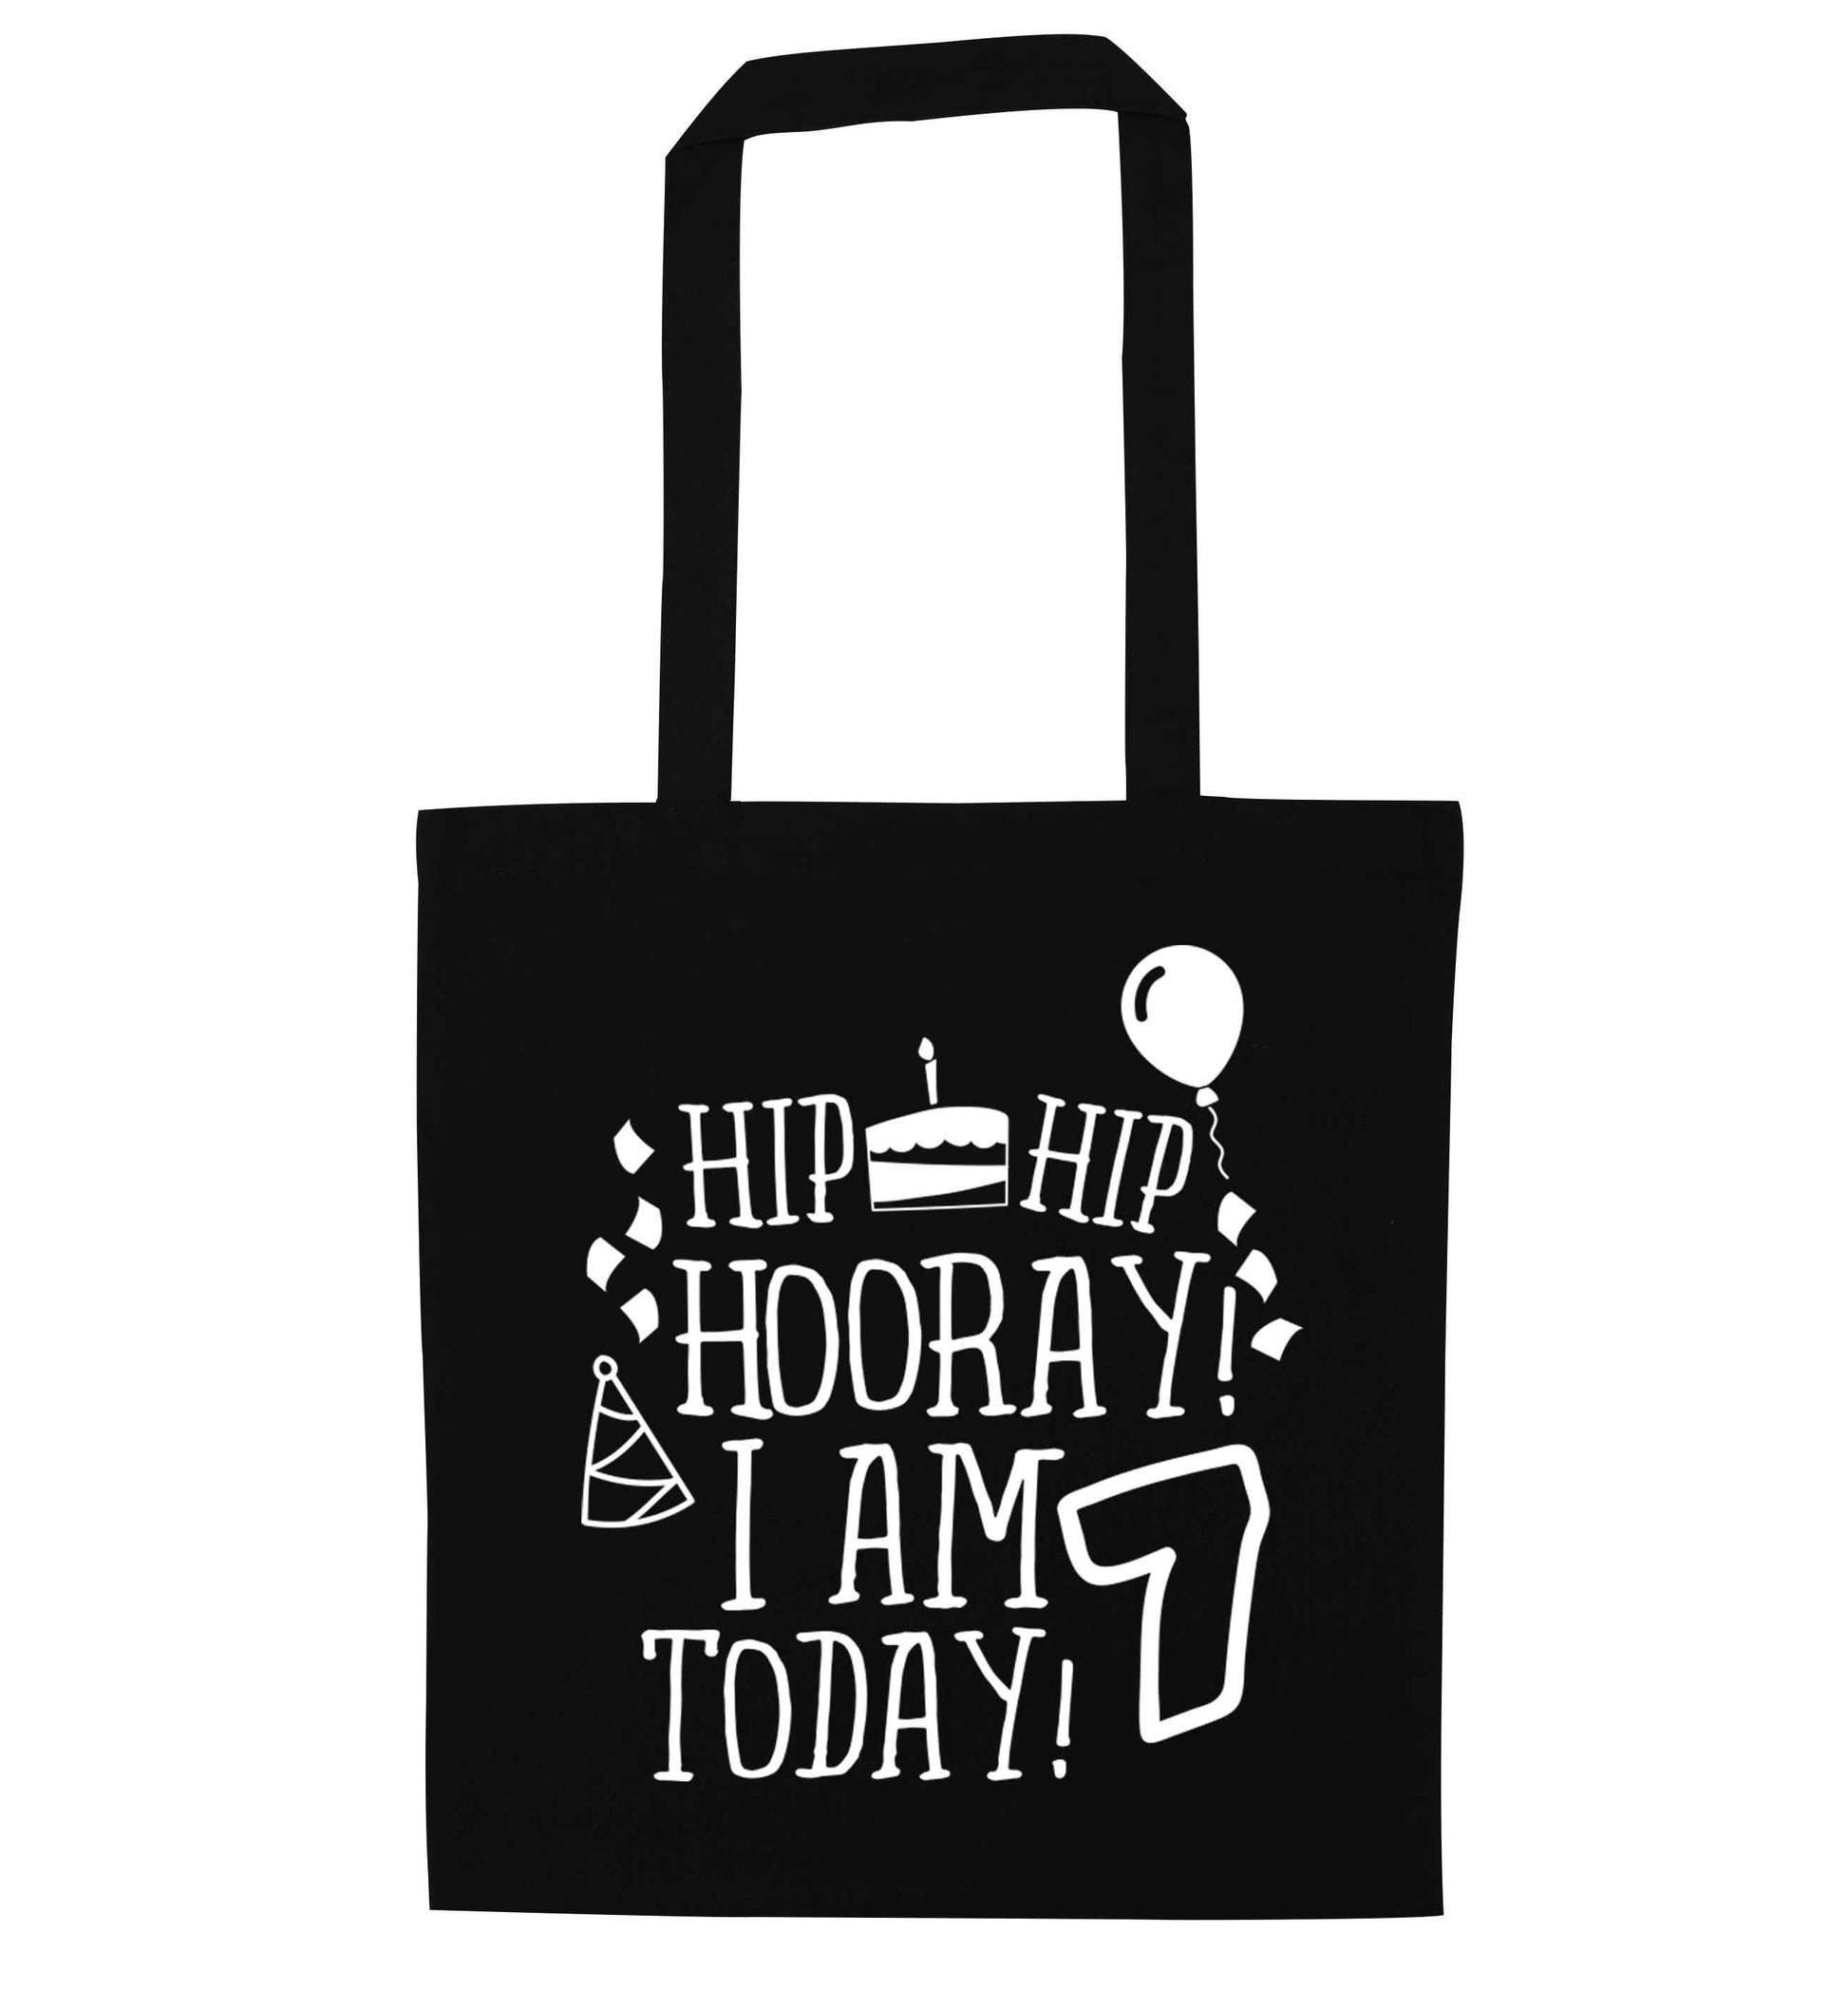 Hip hip I am seven today! black tote bag